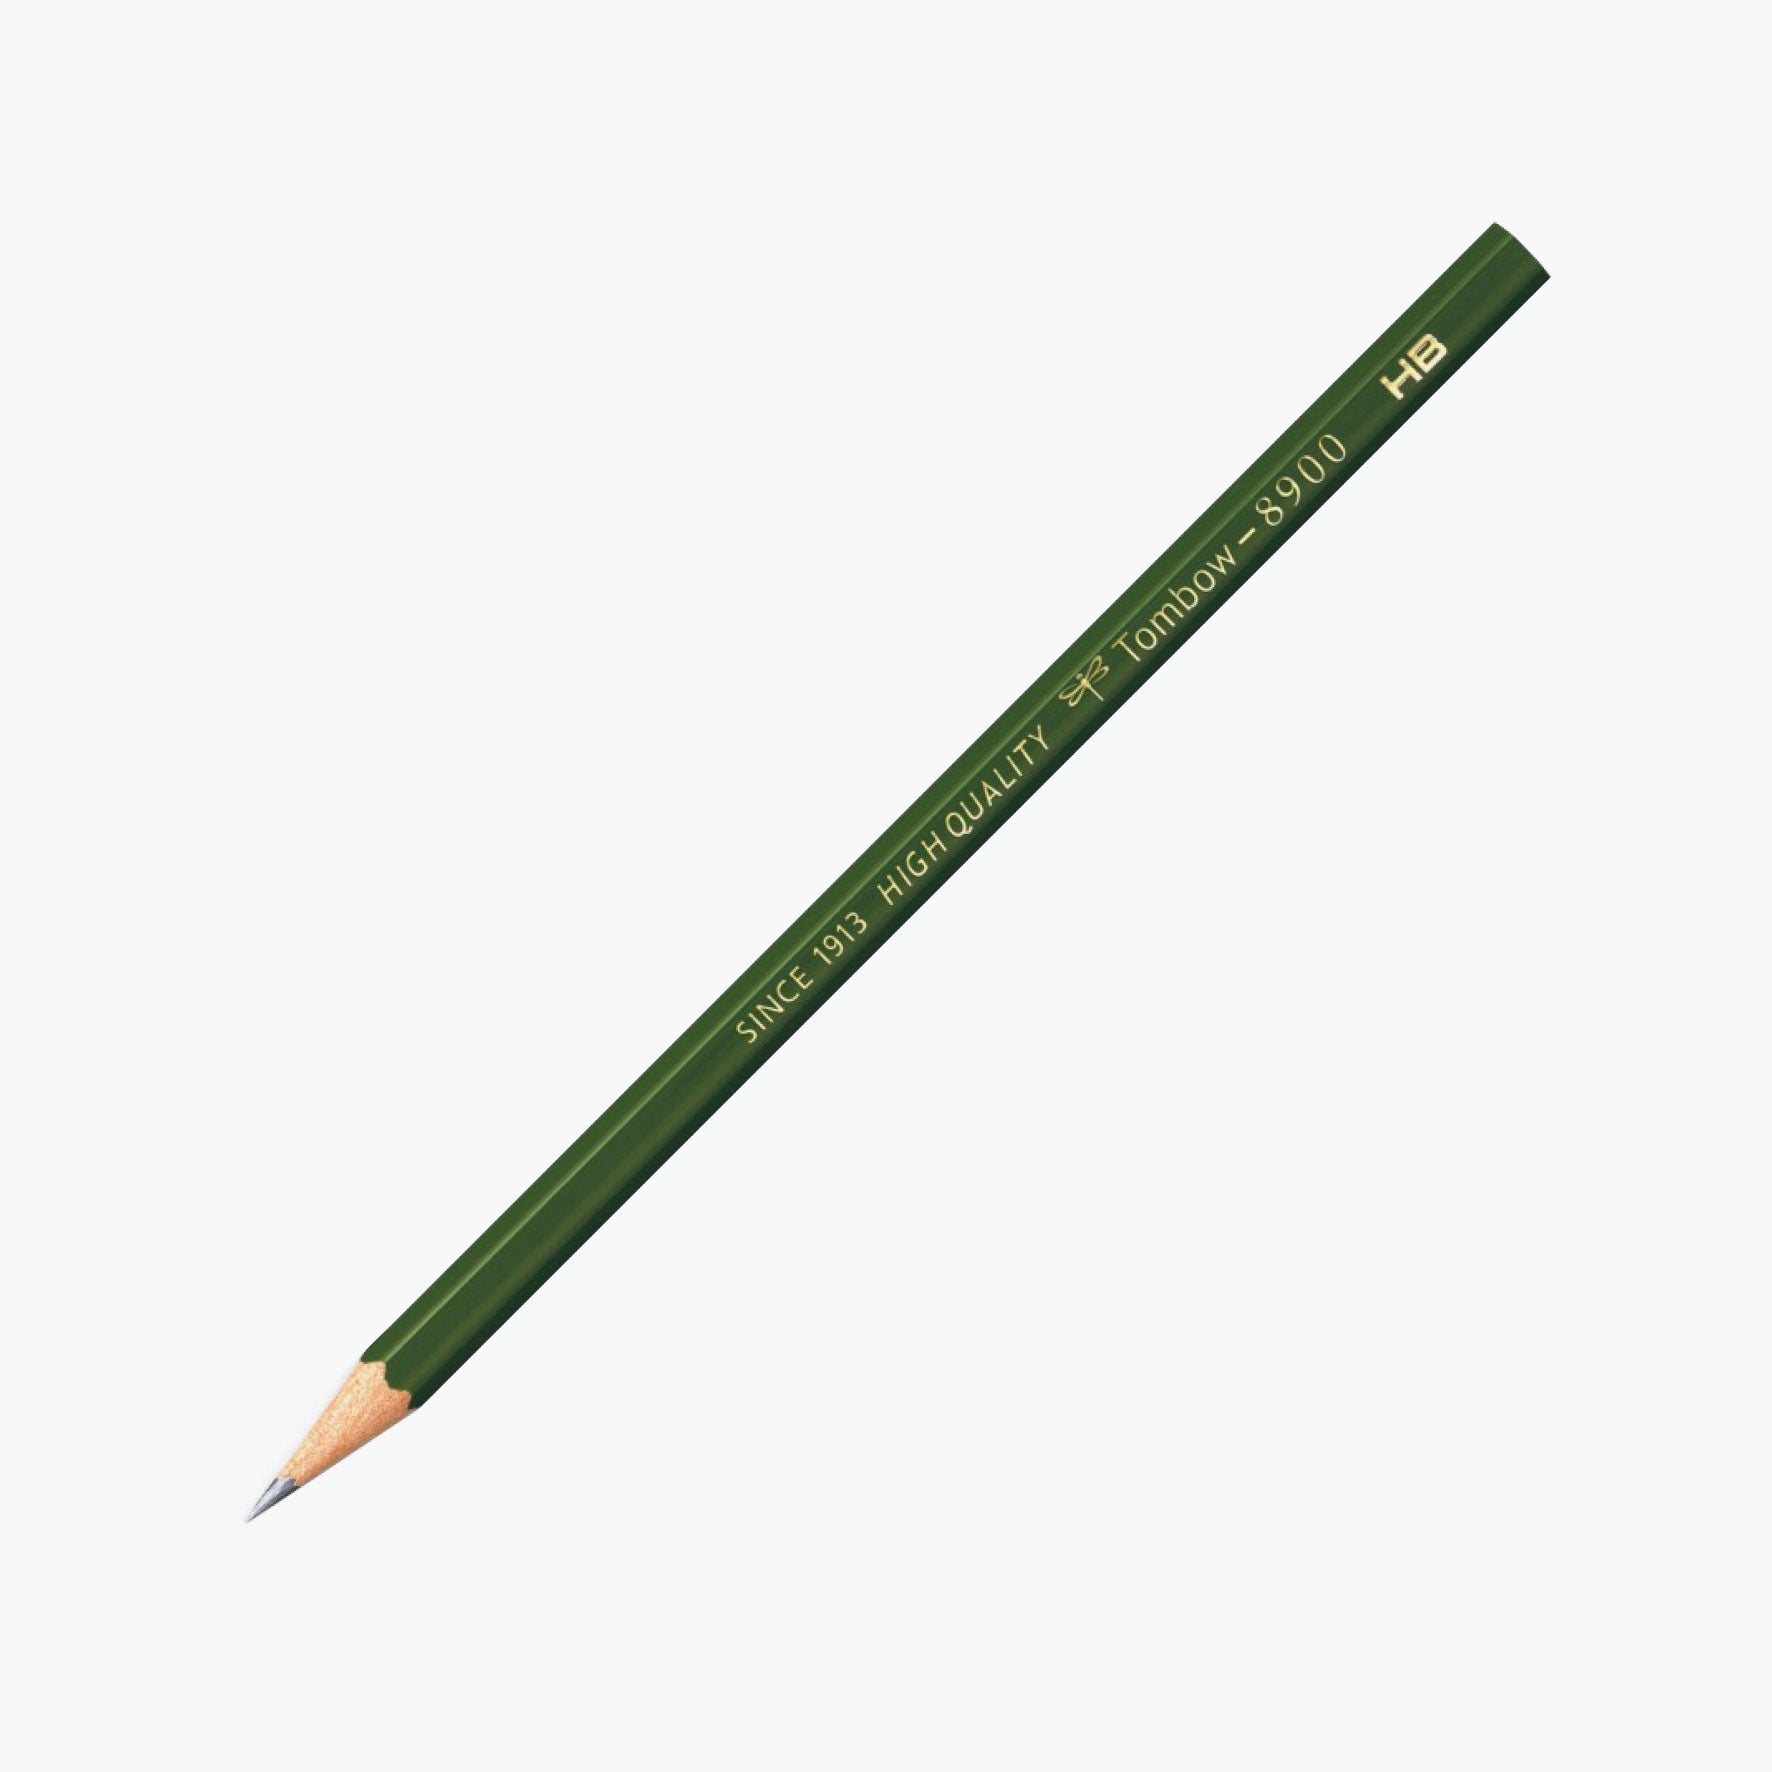 Tombow - Pencil - 8900 (Various Grades) - Box of 12